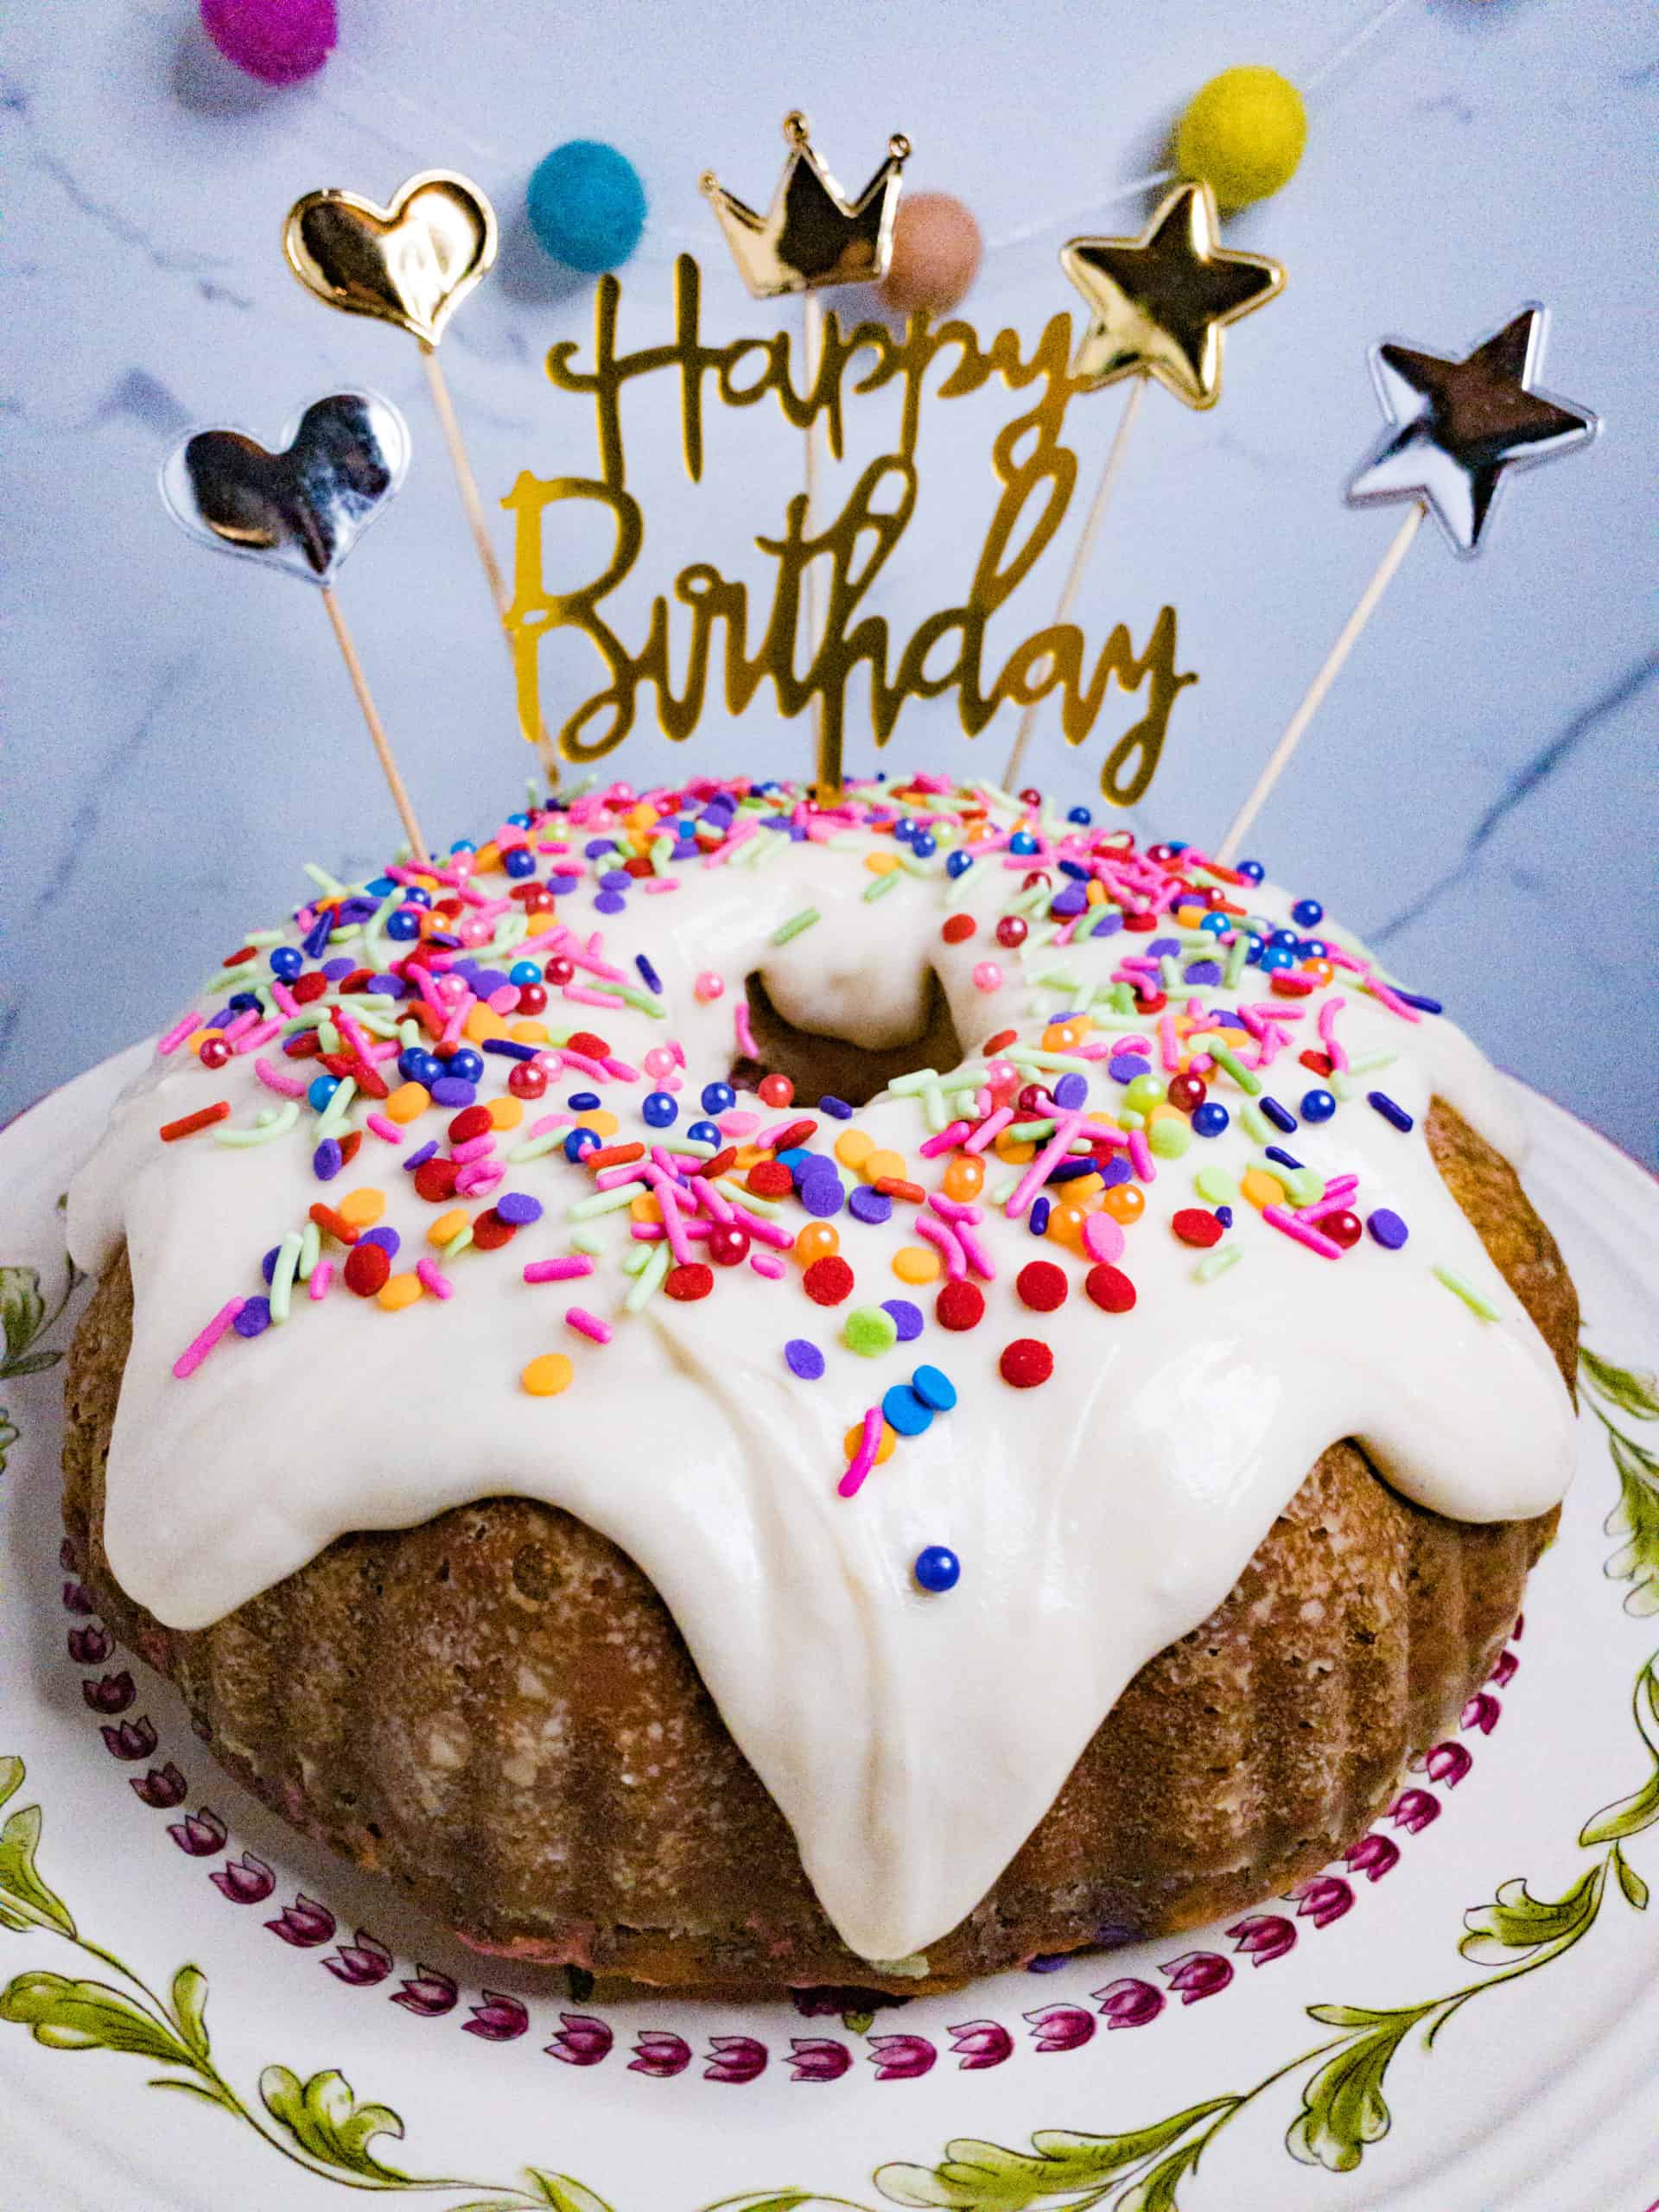 https://shesalmostalwayshungry.com/wp-content/uploads/2022/08/Birthday-bundt-cake-scaled.jpg